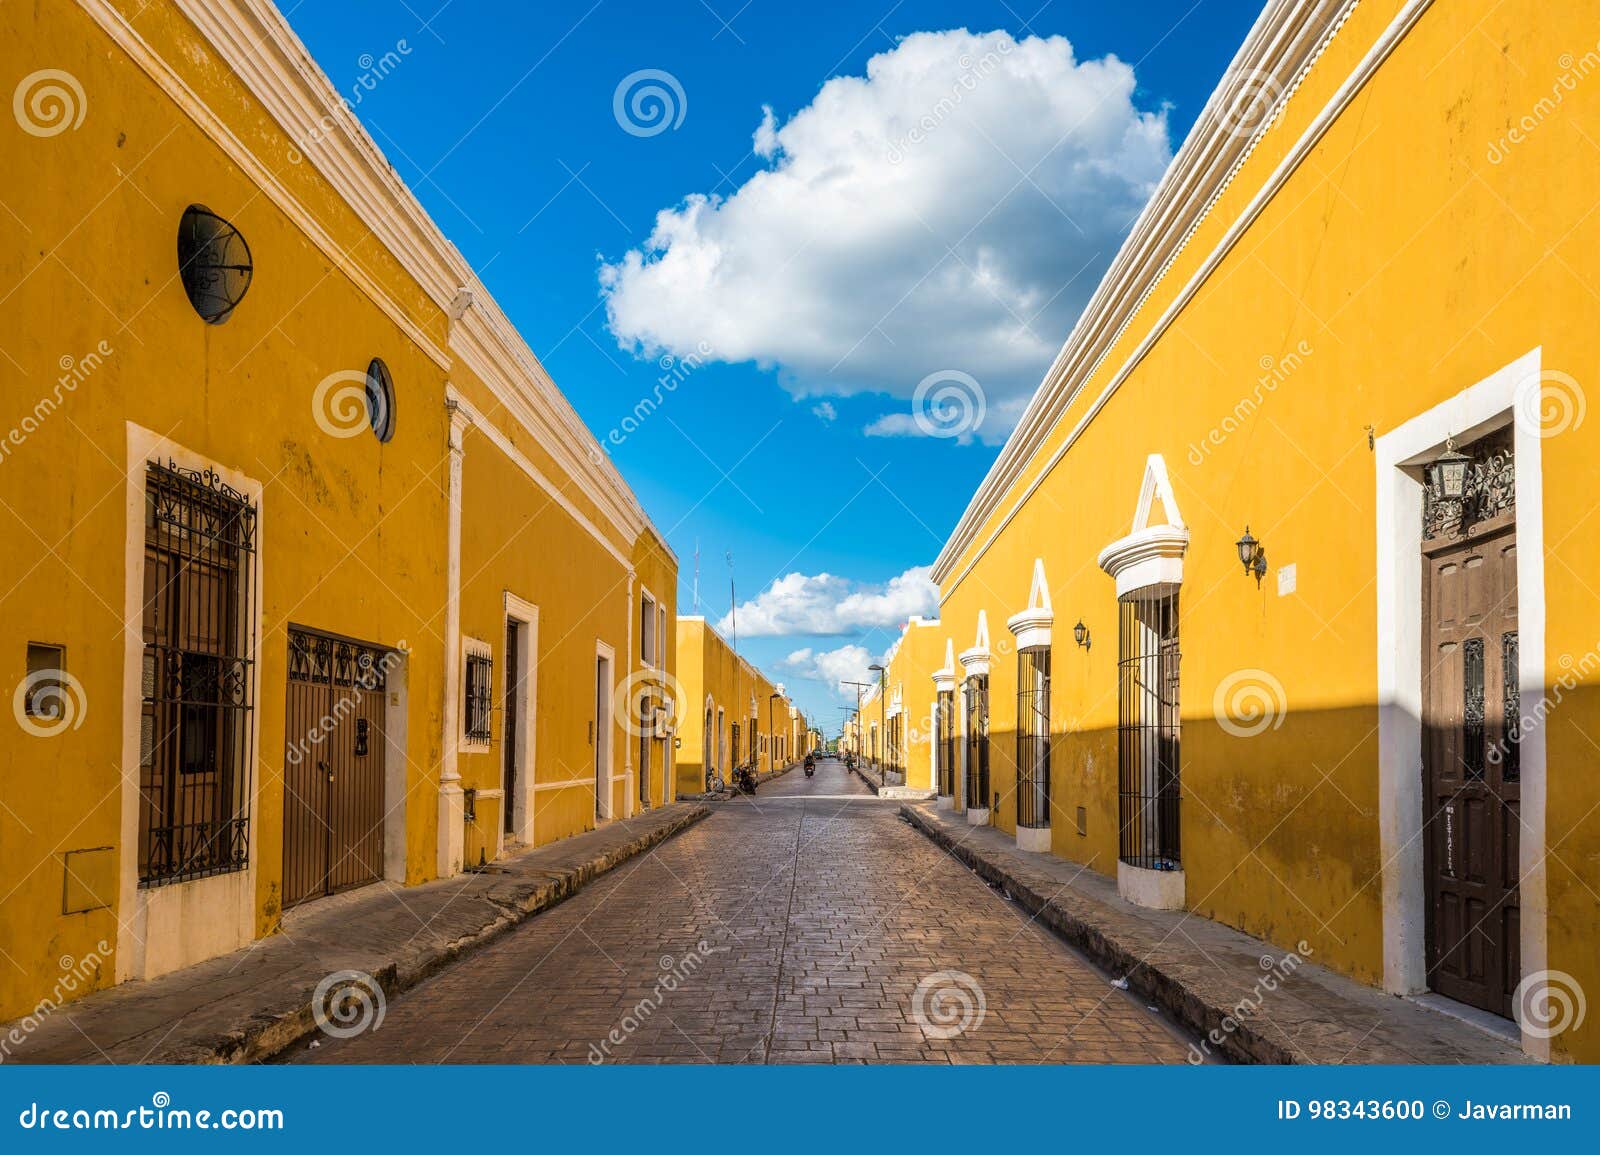 izamal, the yellow colonial city of yucatan, mexico